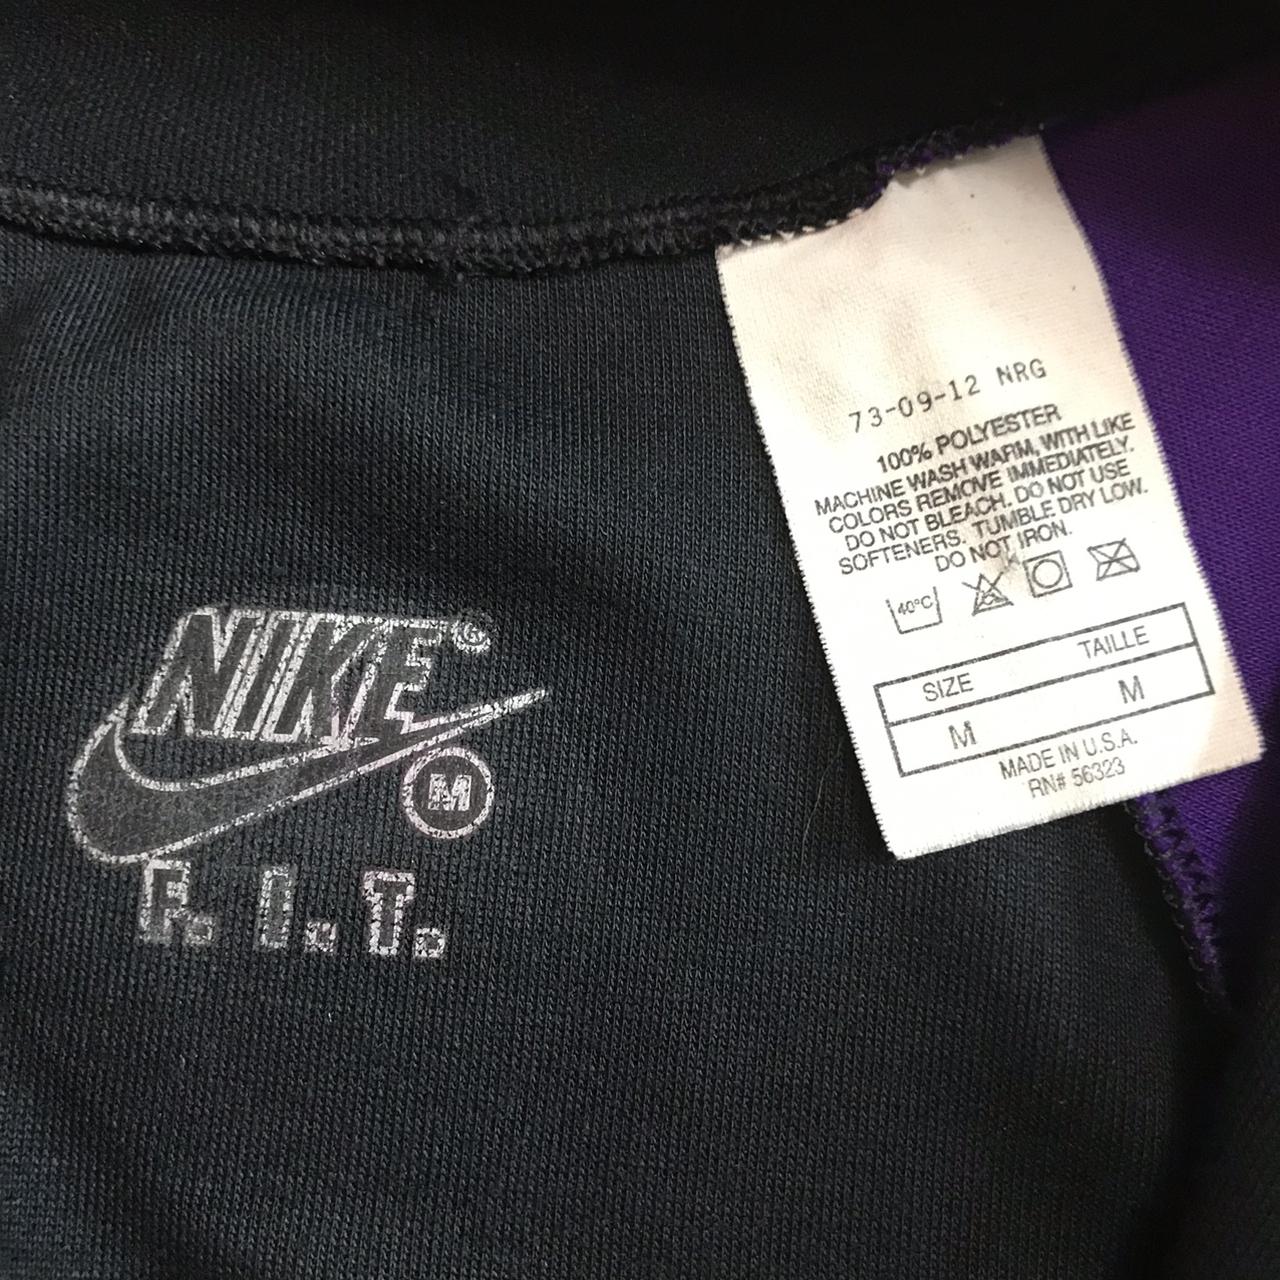 SALE SALE SALE SALE 39.00 Vintage Nike Fit Running... - Depop